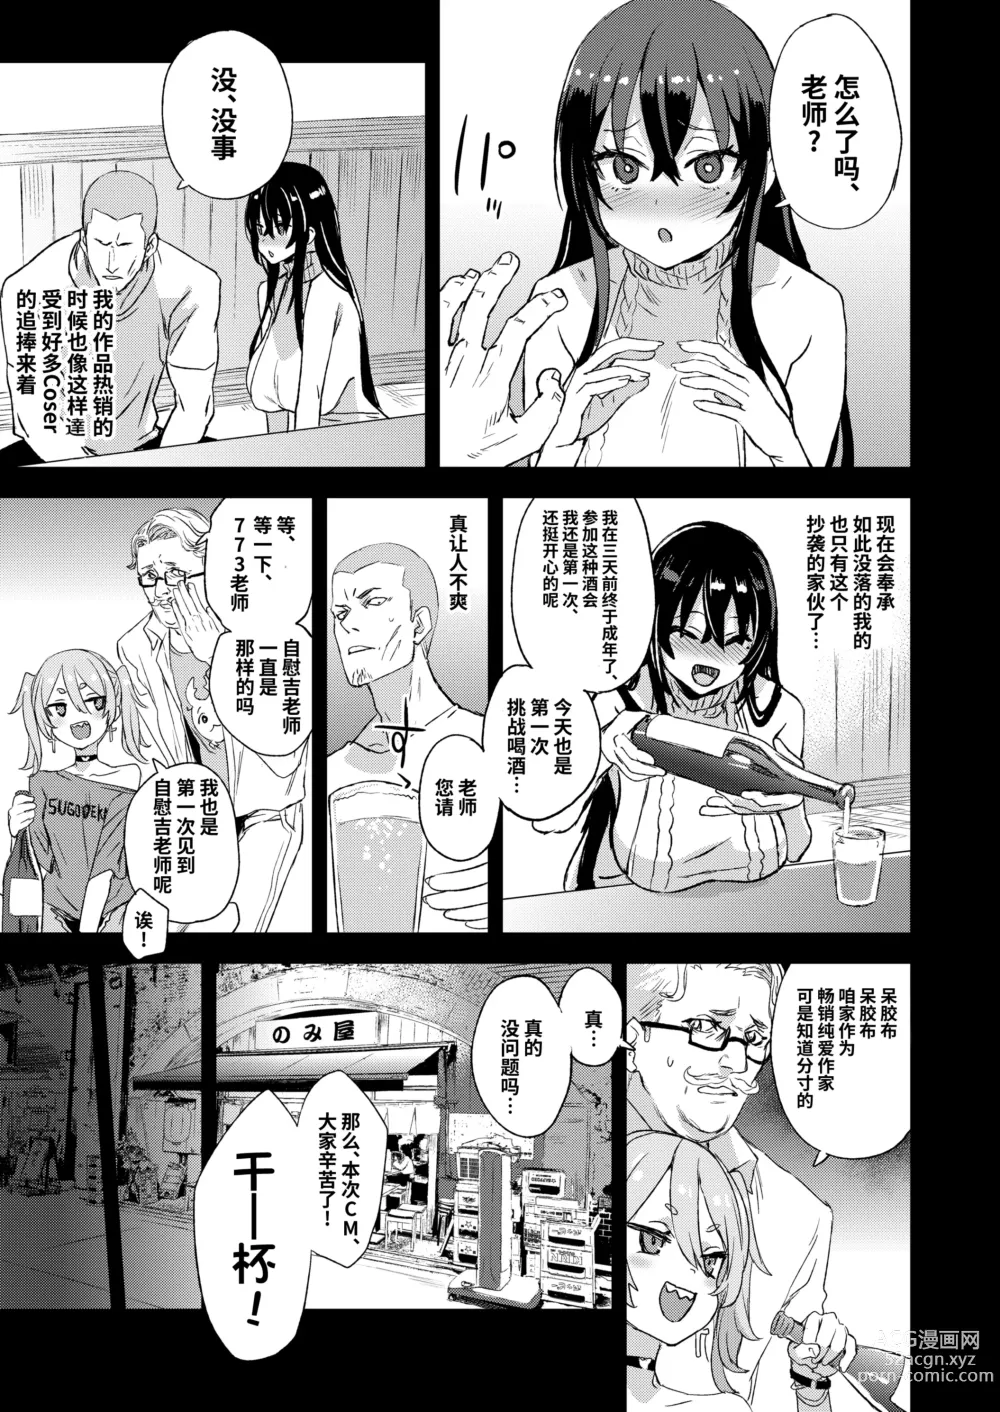 Page 9 of doujinshi 骑乘院老师的色情漫画脑